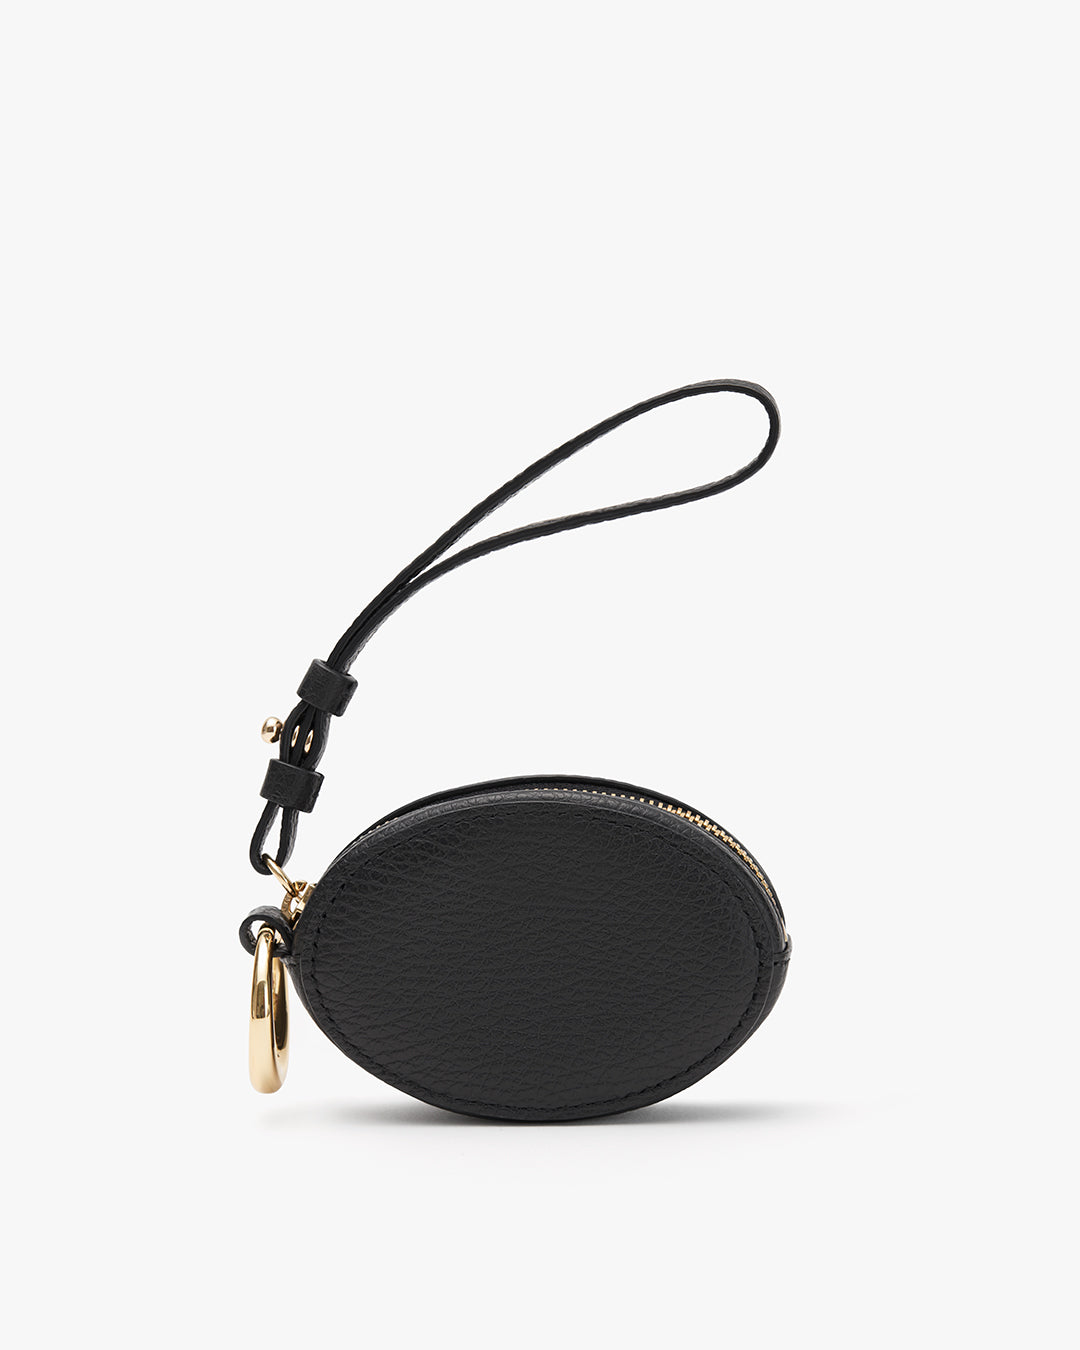 Chains Pendants Bags, Hook Headphones Bag